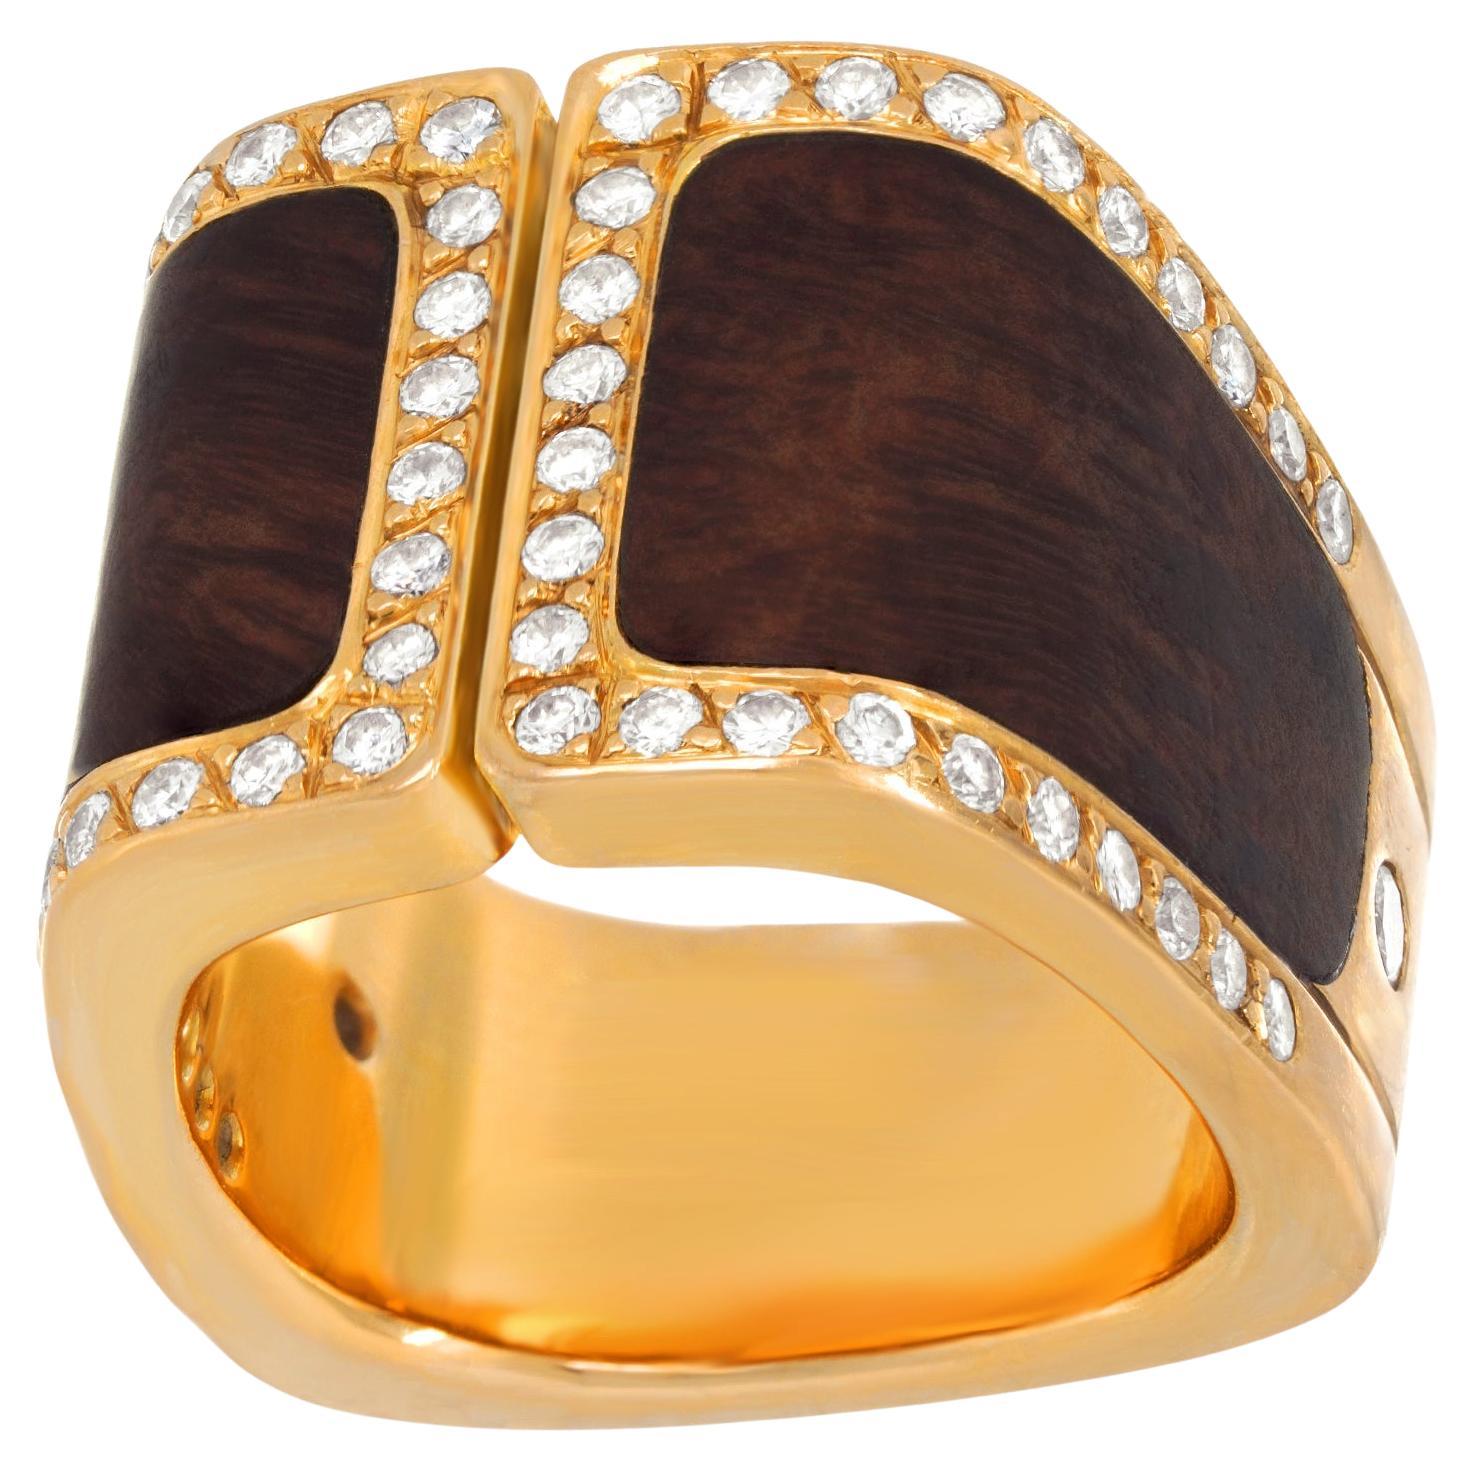 Paul Binder Sixties Swiss Modern Ring im Angebot